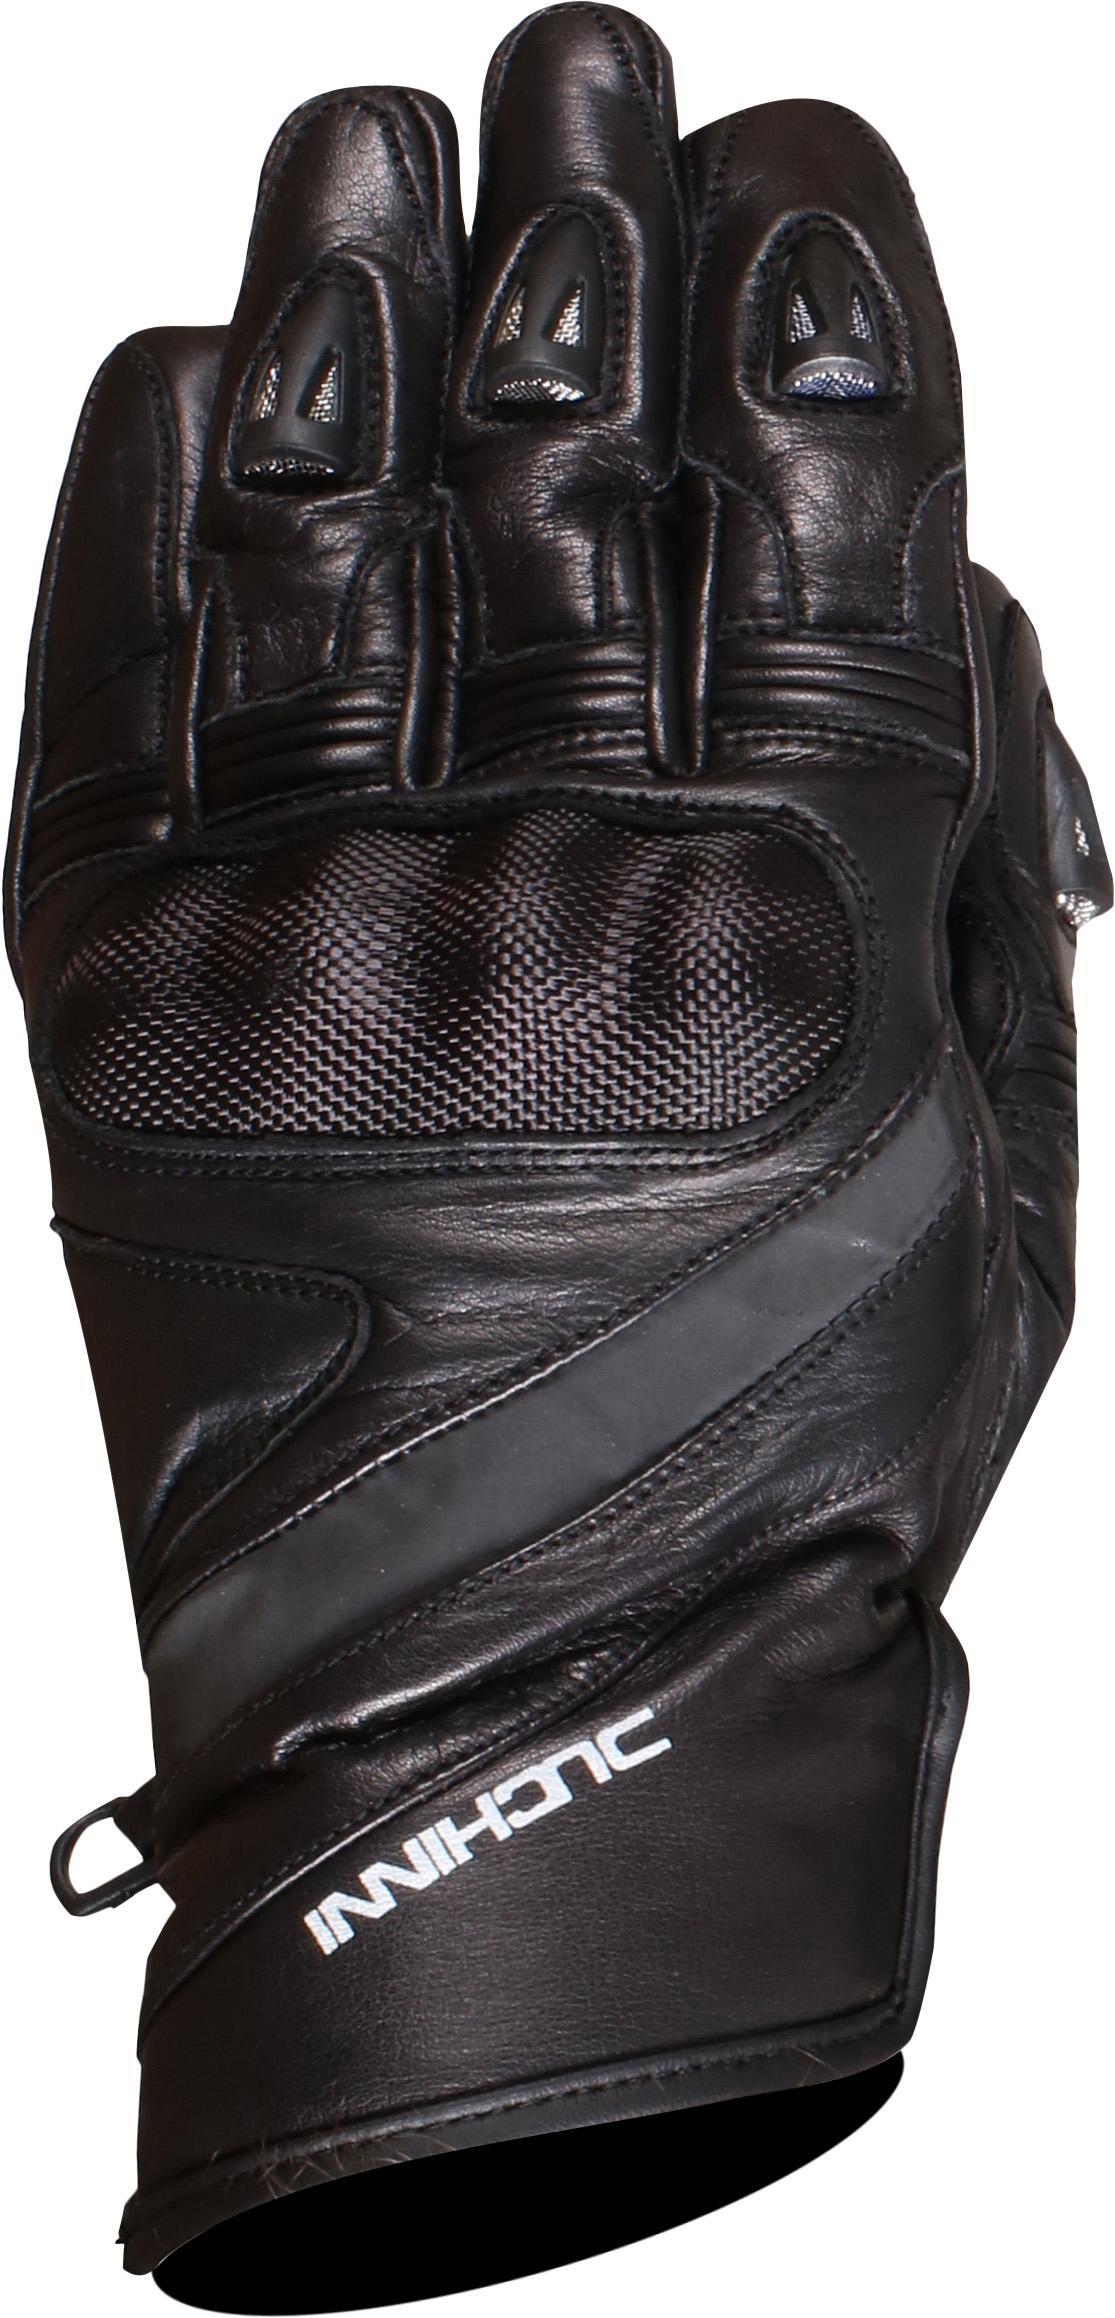 Duchinni Fresco Motorcycle Gloves - Black, S